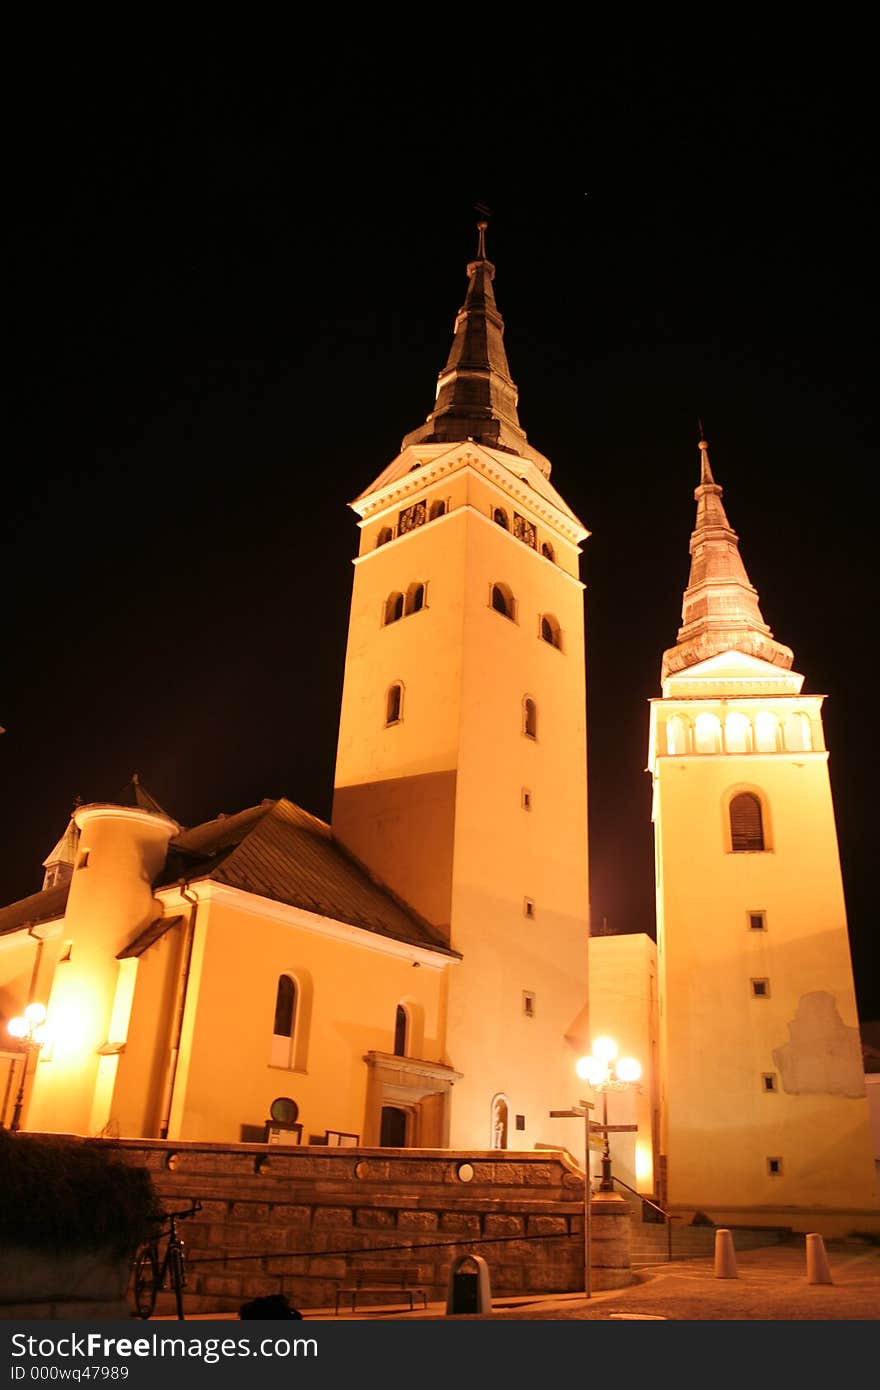 Church in the night - zilina city. Church in the night - zilina city